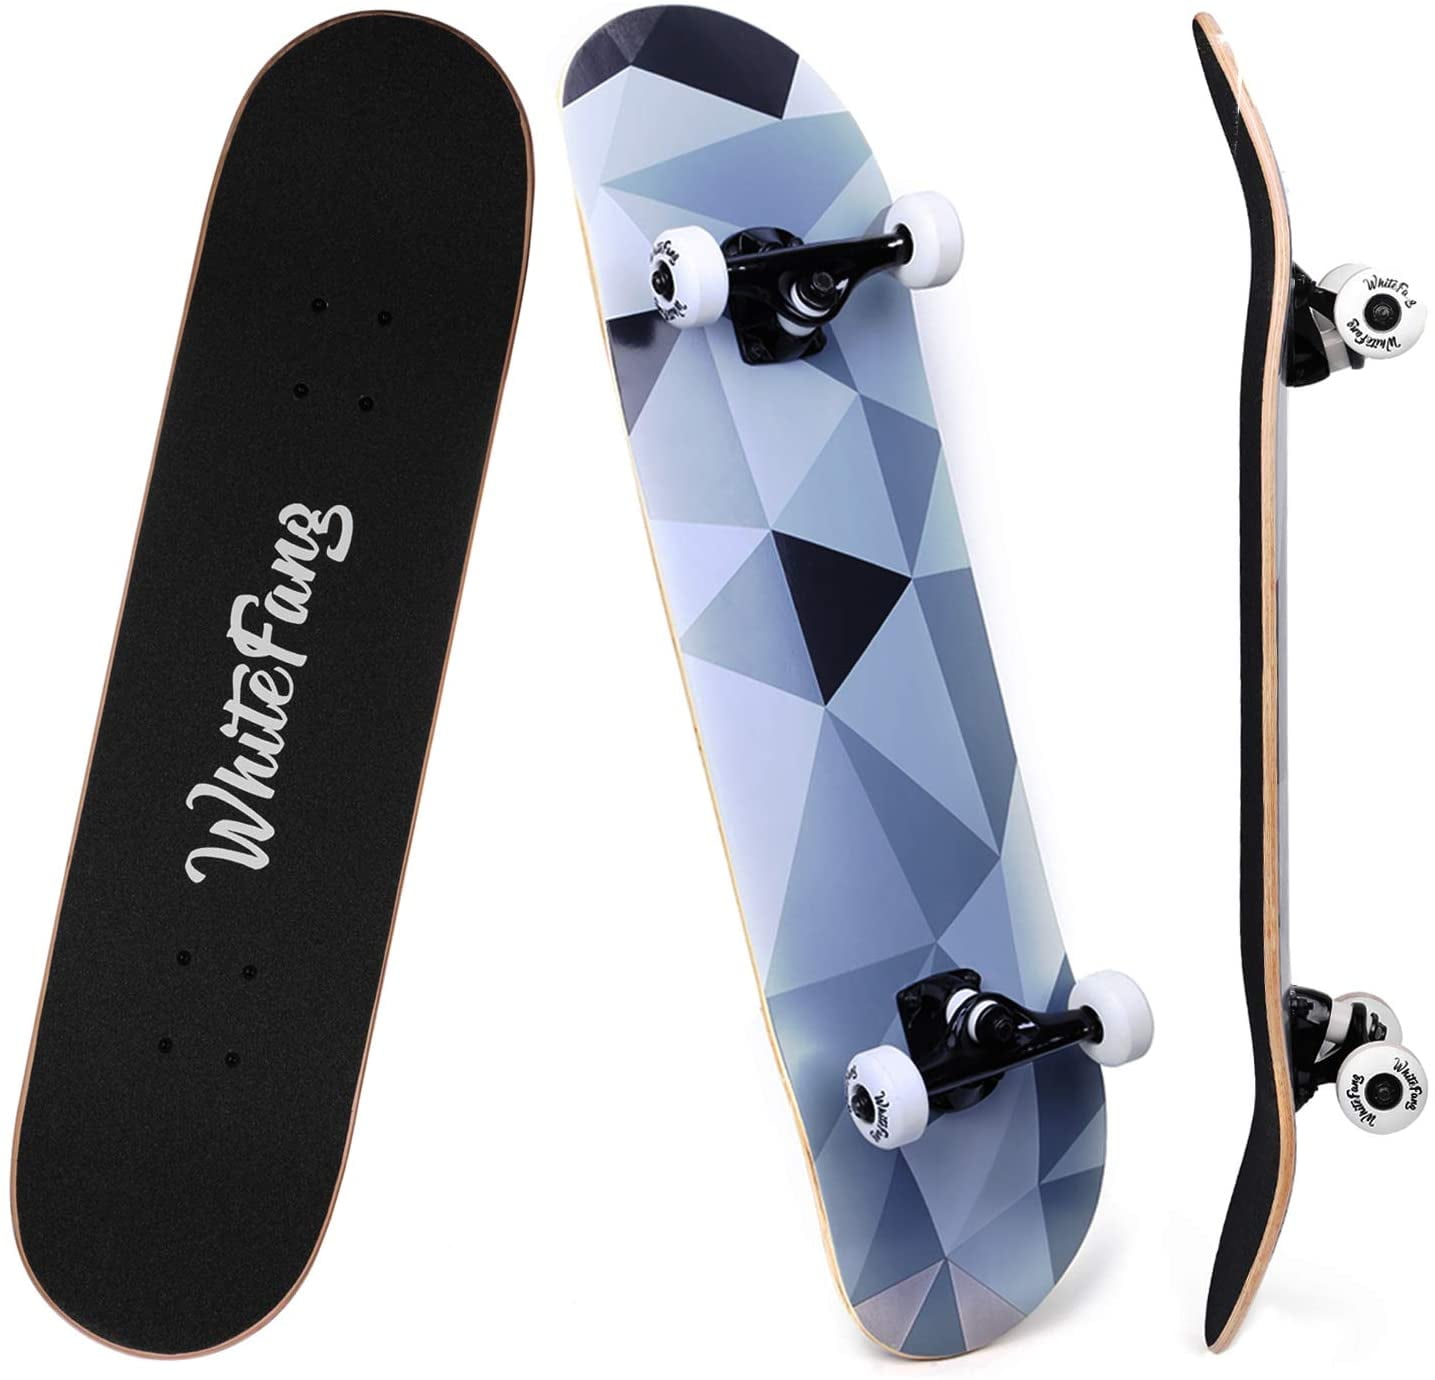 8” X 31” Assembled Skateboard PRO Skateboards Complete New Adult or Kids Gifts 